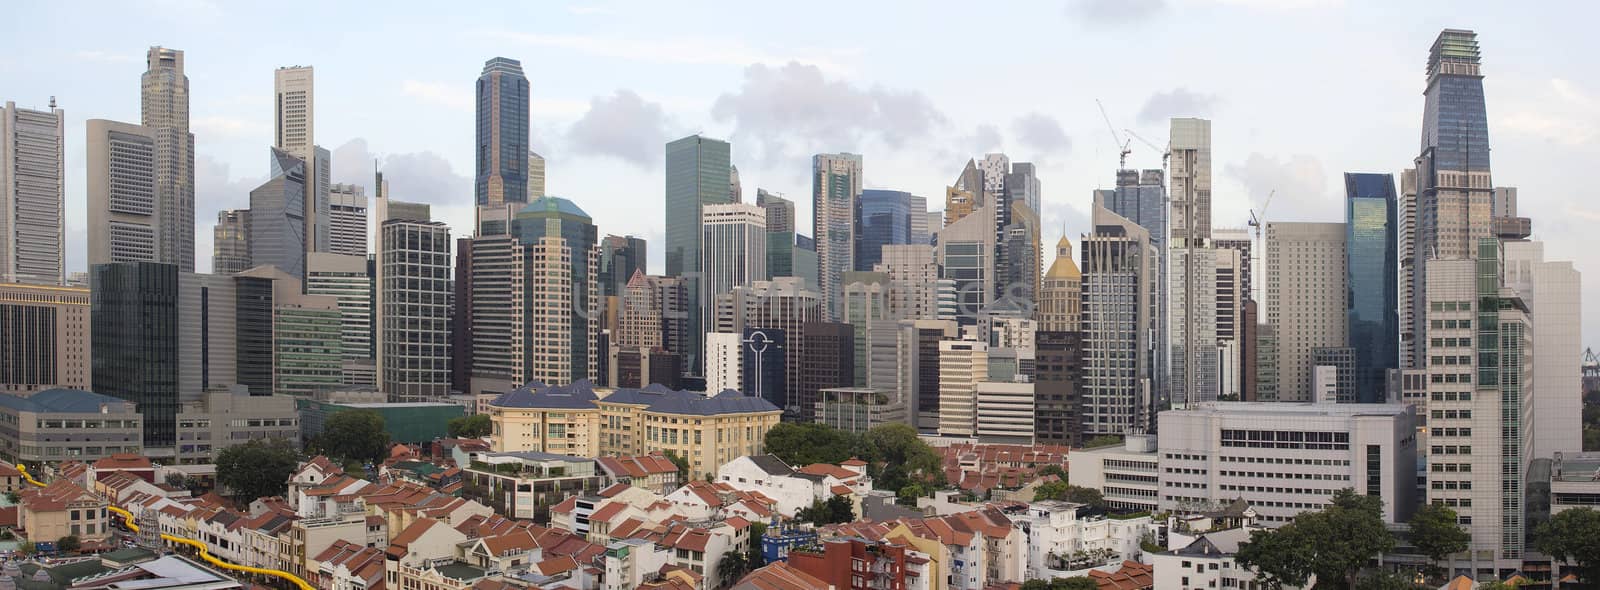 Singapore City Skyline And Chinatown Area Daytime Panorama